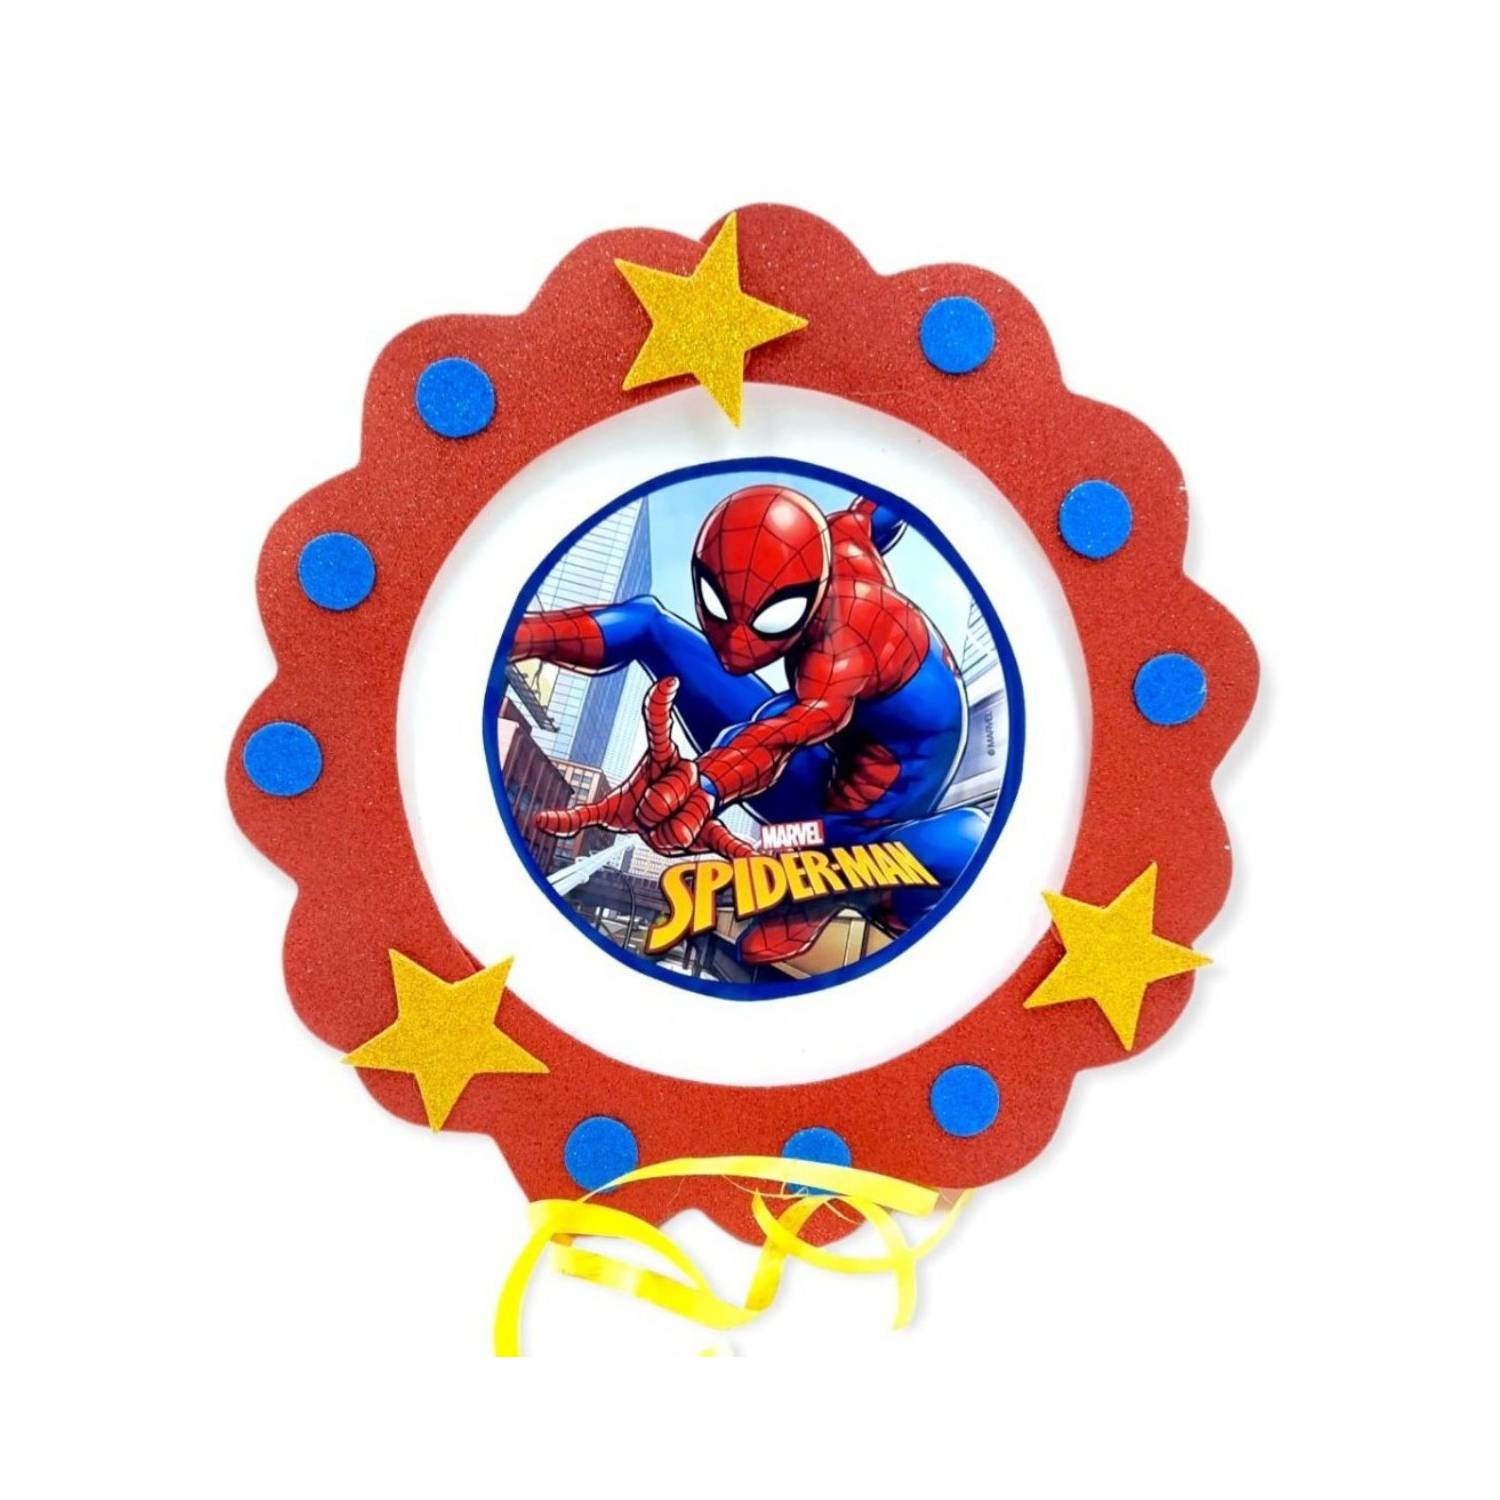 A piñata spiderman